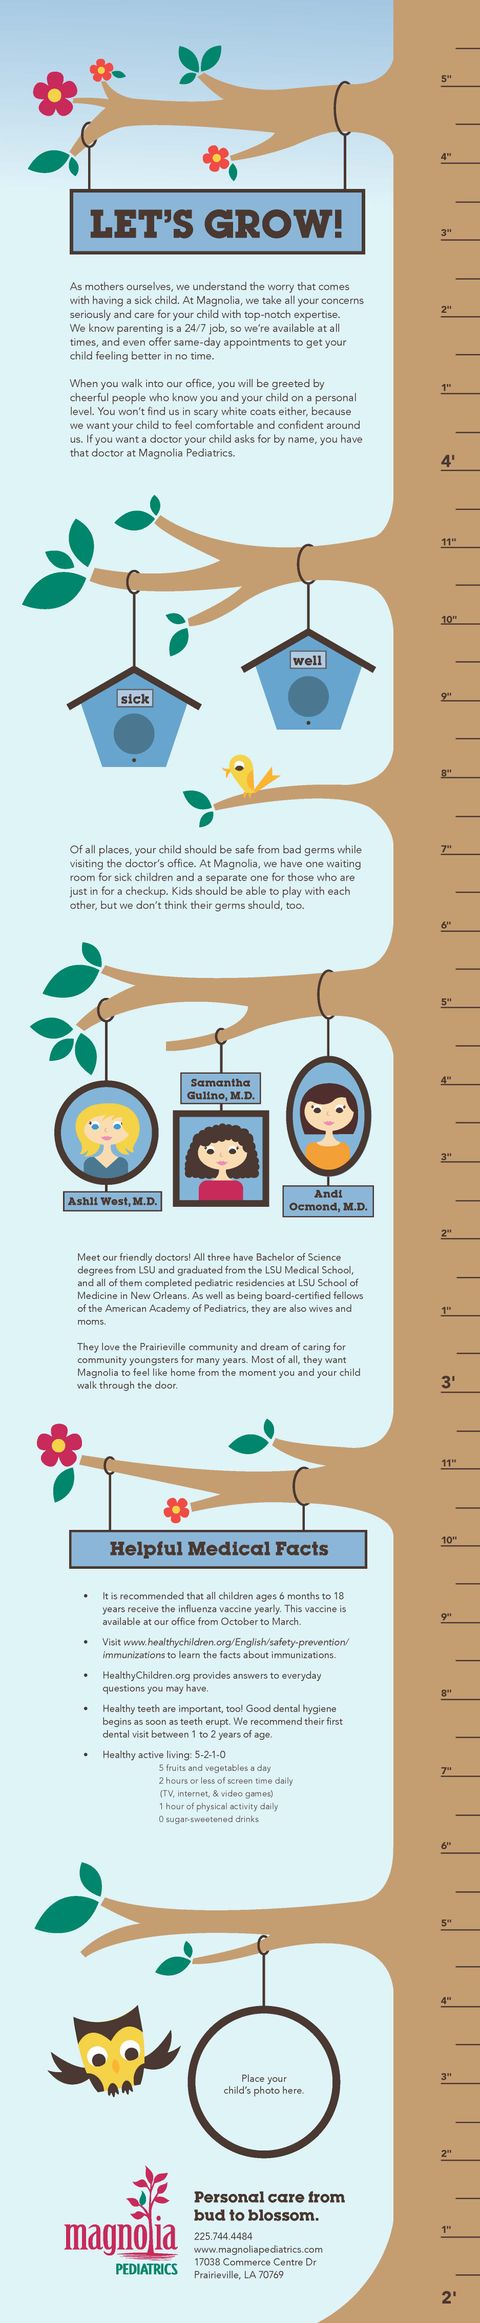 magnolia pediatrics campaign by roux llc franklin tn page 5